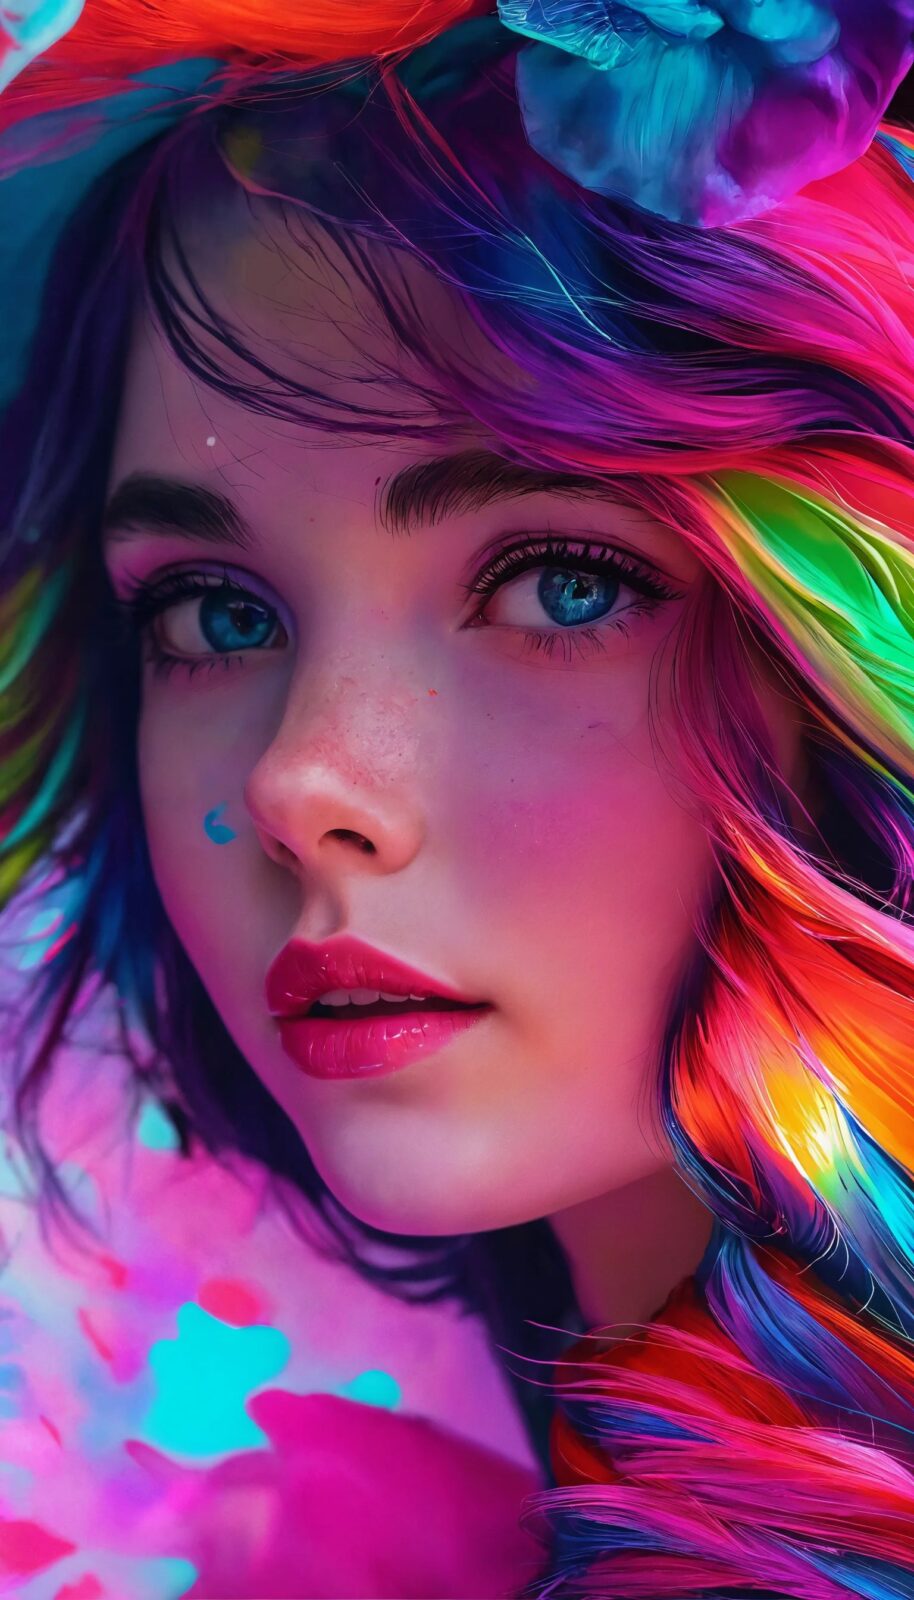 Colorful Girl iPhone Wallpaper 4K | Free Download